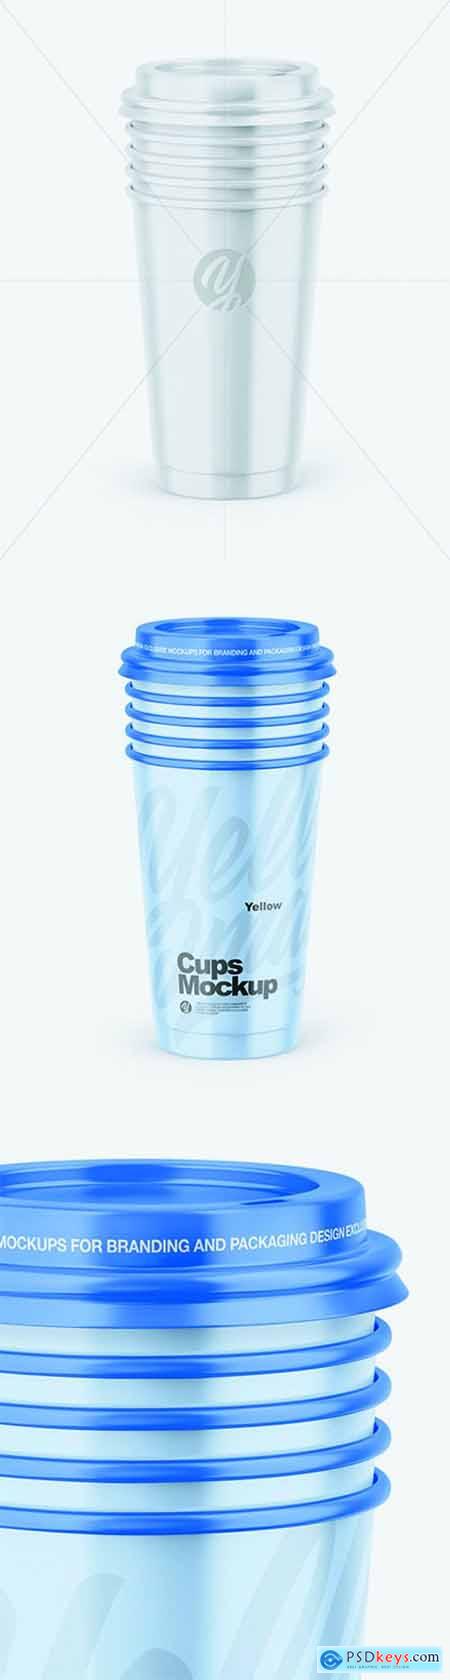 Glossy Cups Mockup 68839